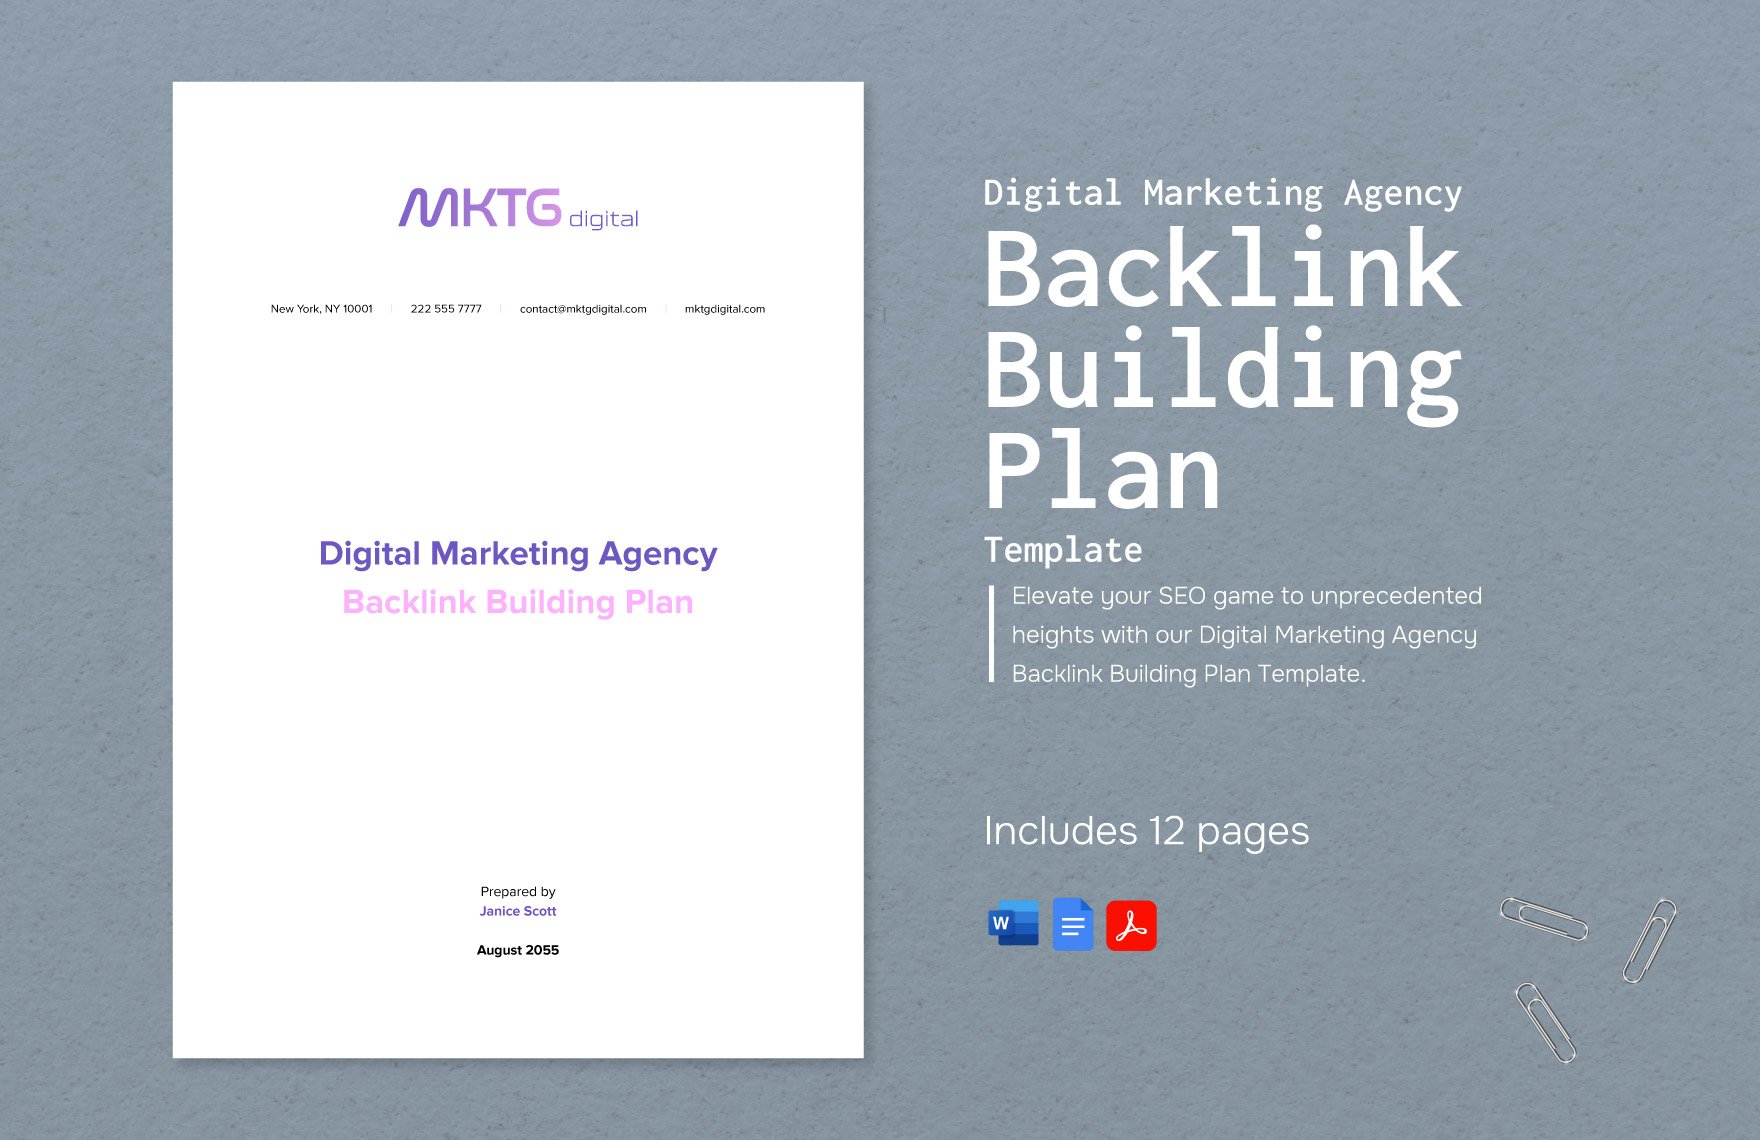 Digital Marketing Agency Backlink Building Plan Template in Word, Google Docs, PDF